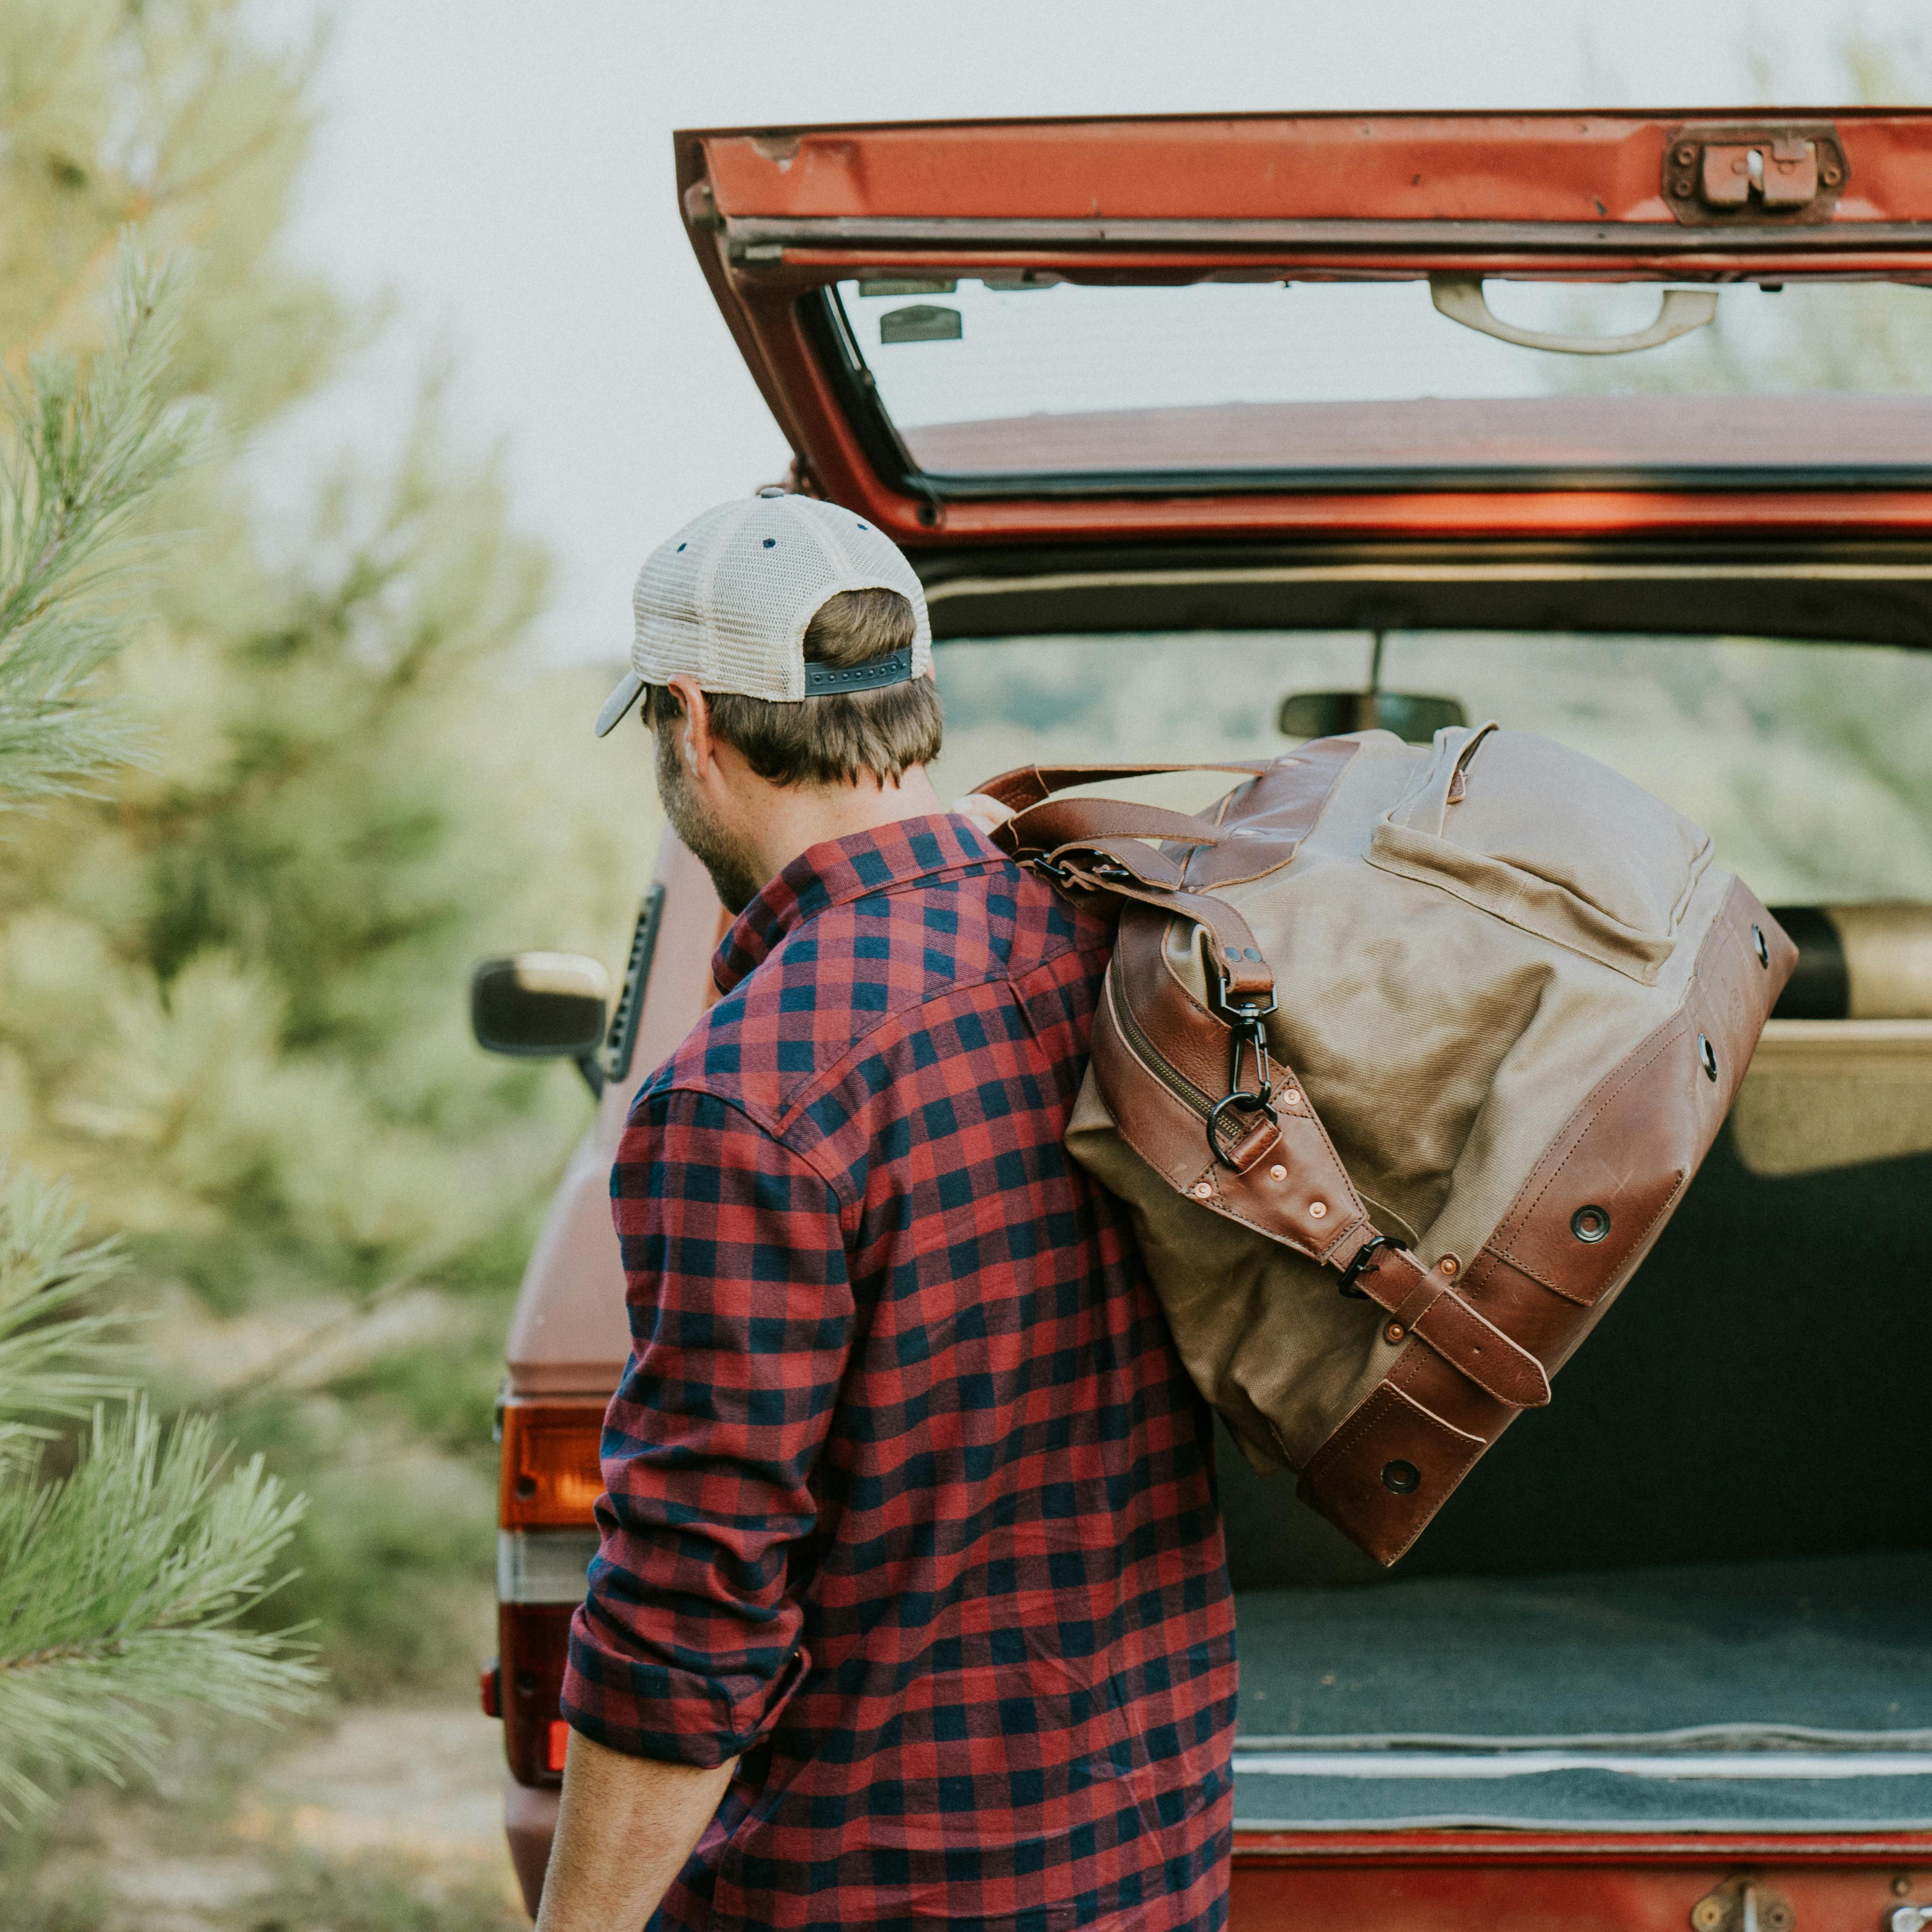 Dakota Waxed Canvas Commuter Backpack | Field Khaki w/ Chestnut Brown Leather